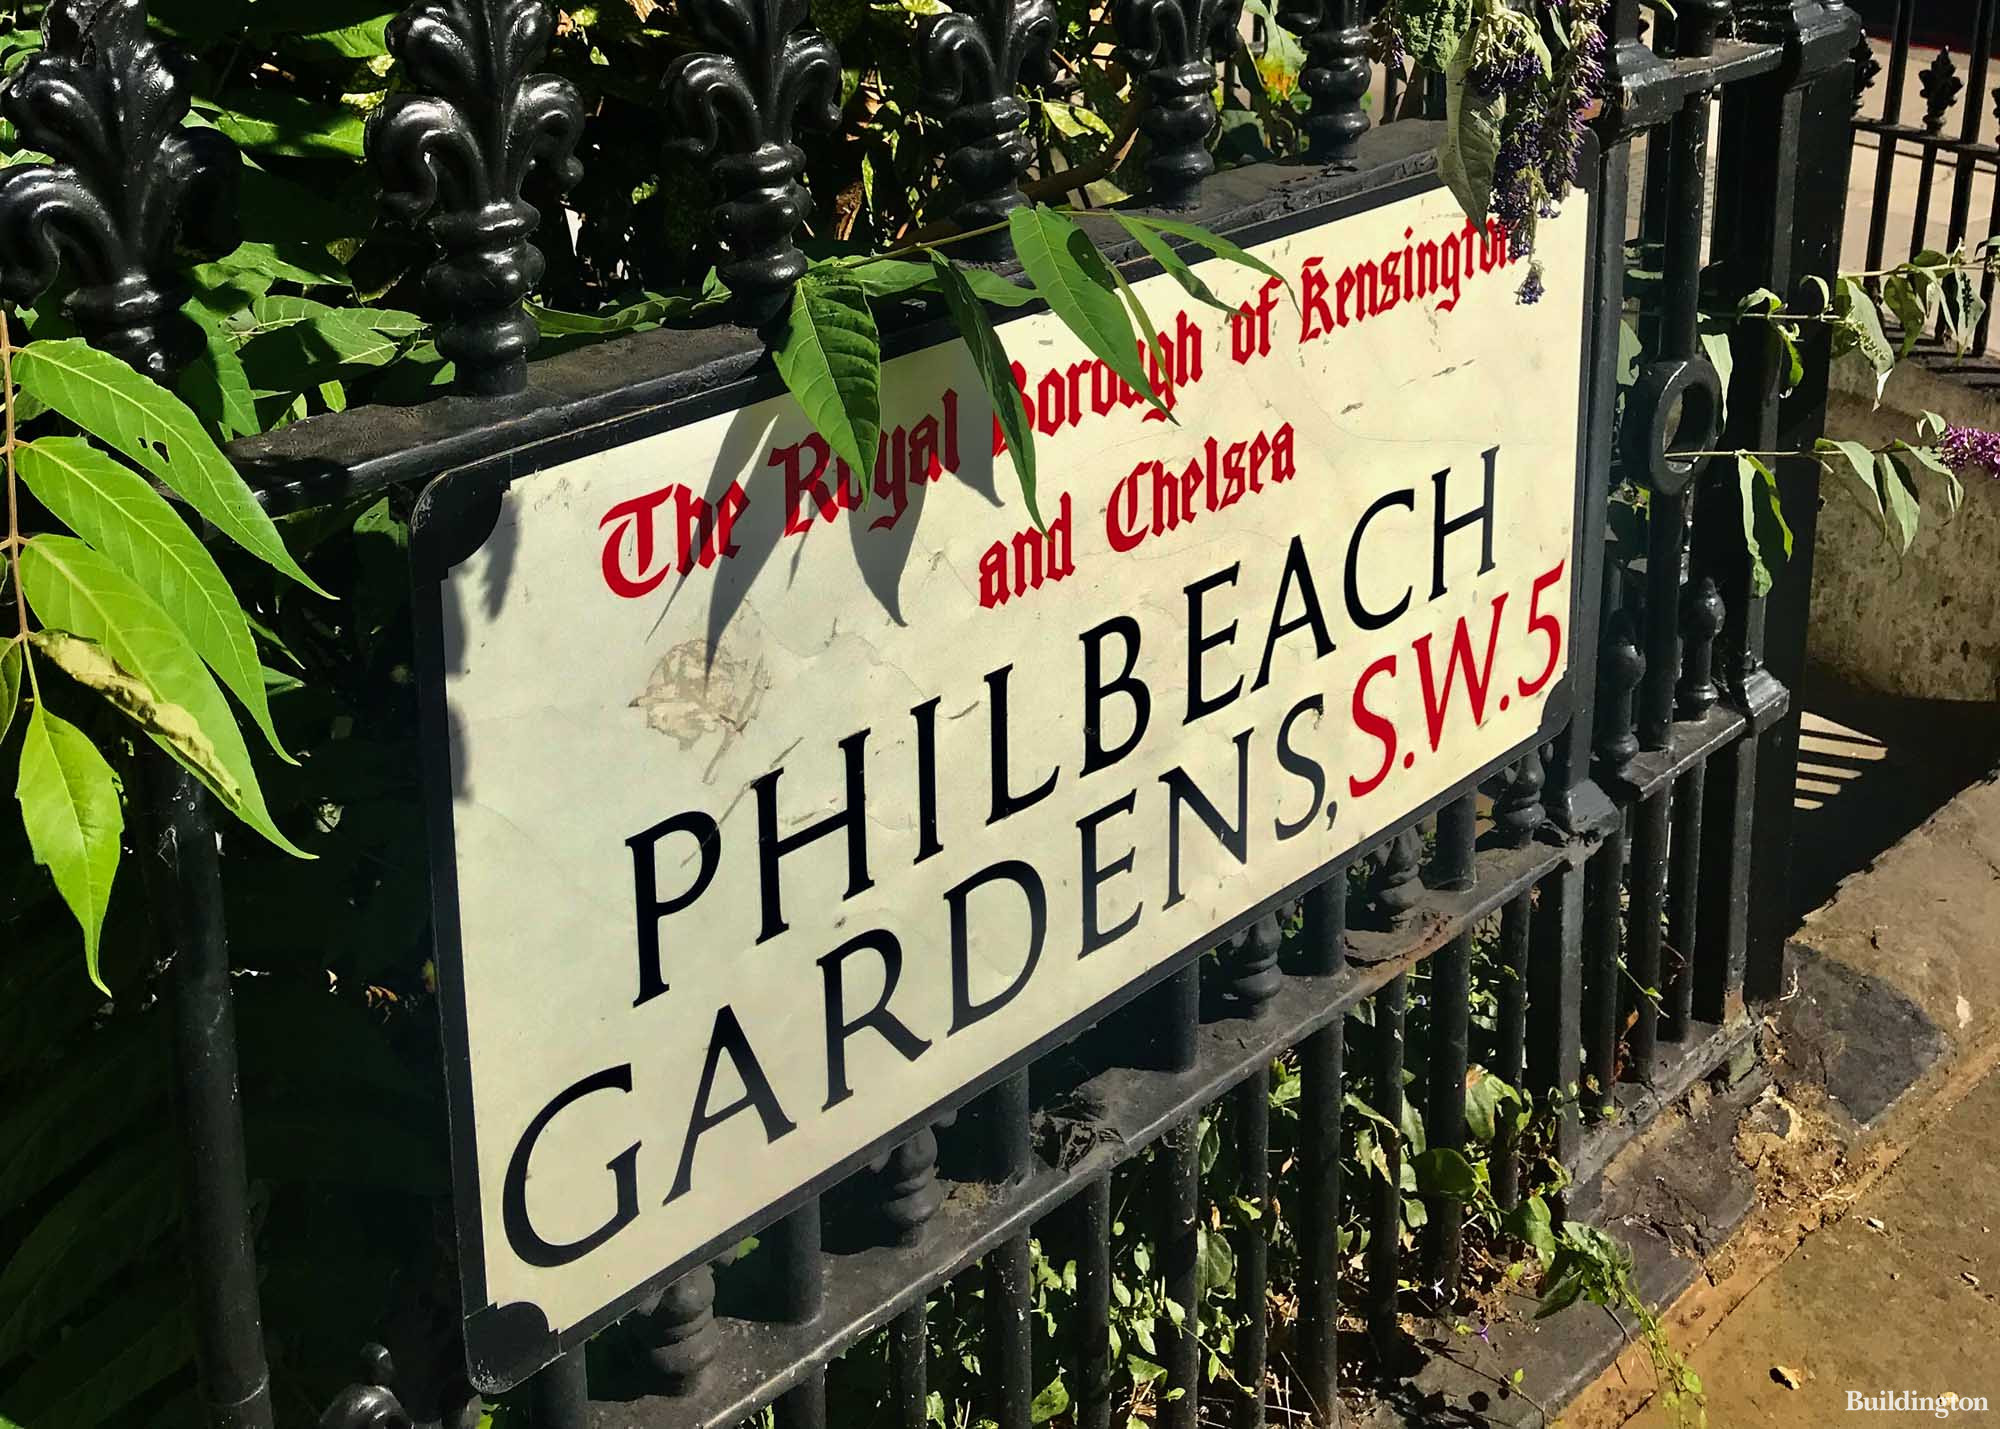 Philbeach Gardens street sign